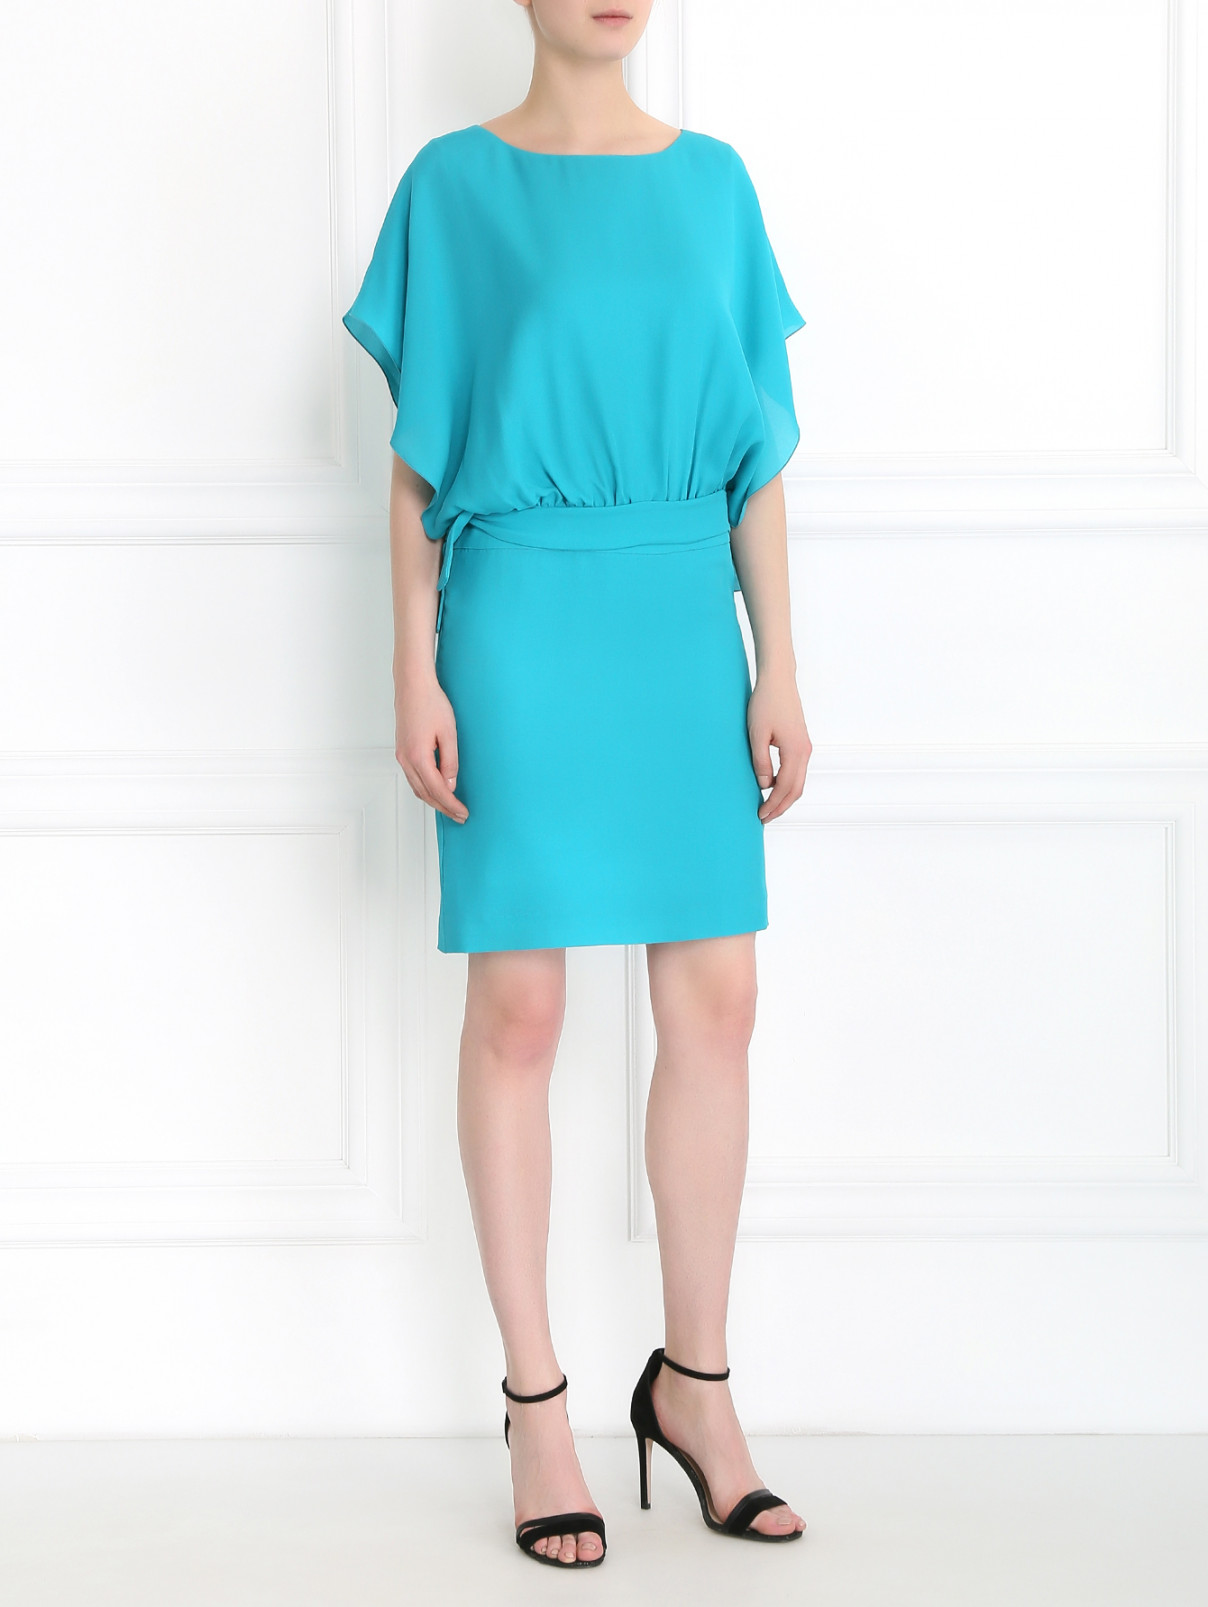 Платье из шелка Alberta Ferretti  –  Модель Общий вид  – Цвет:  Синий